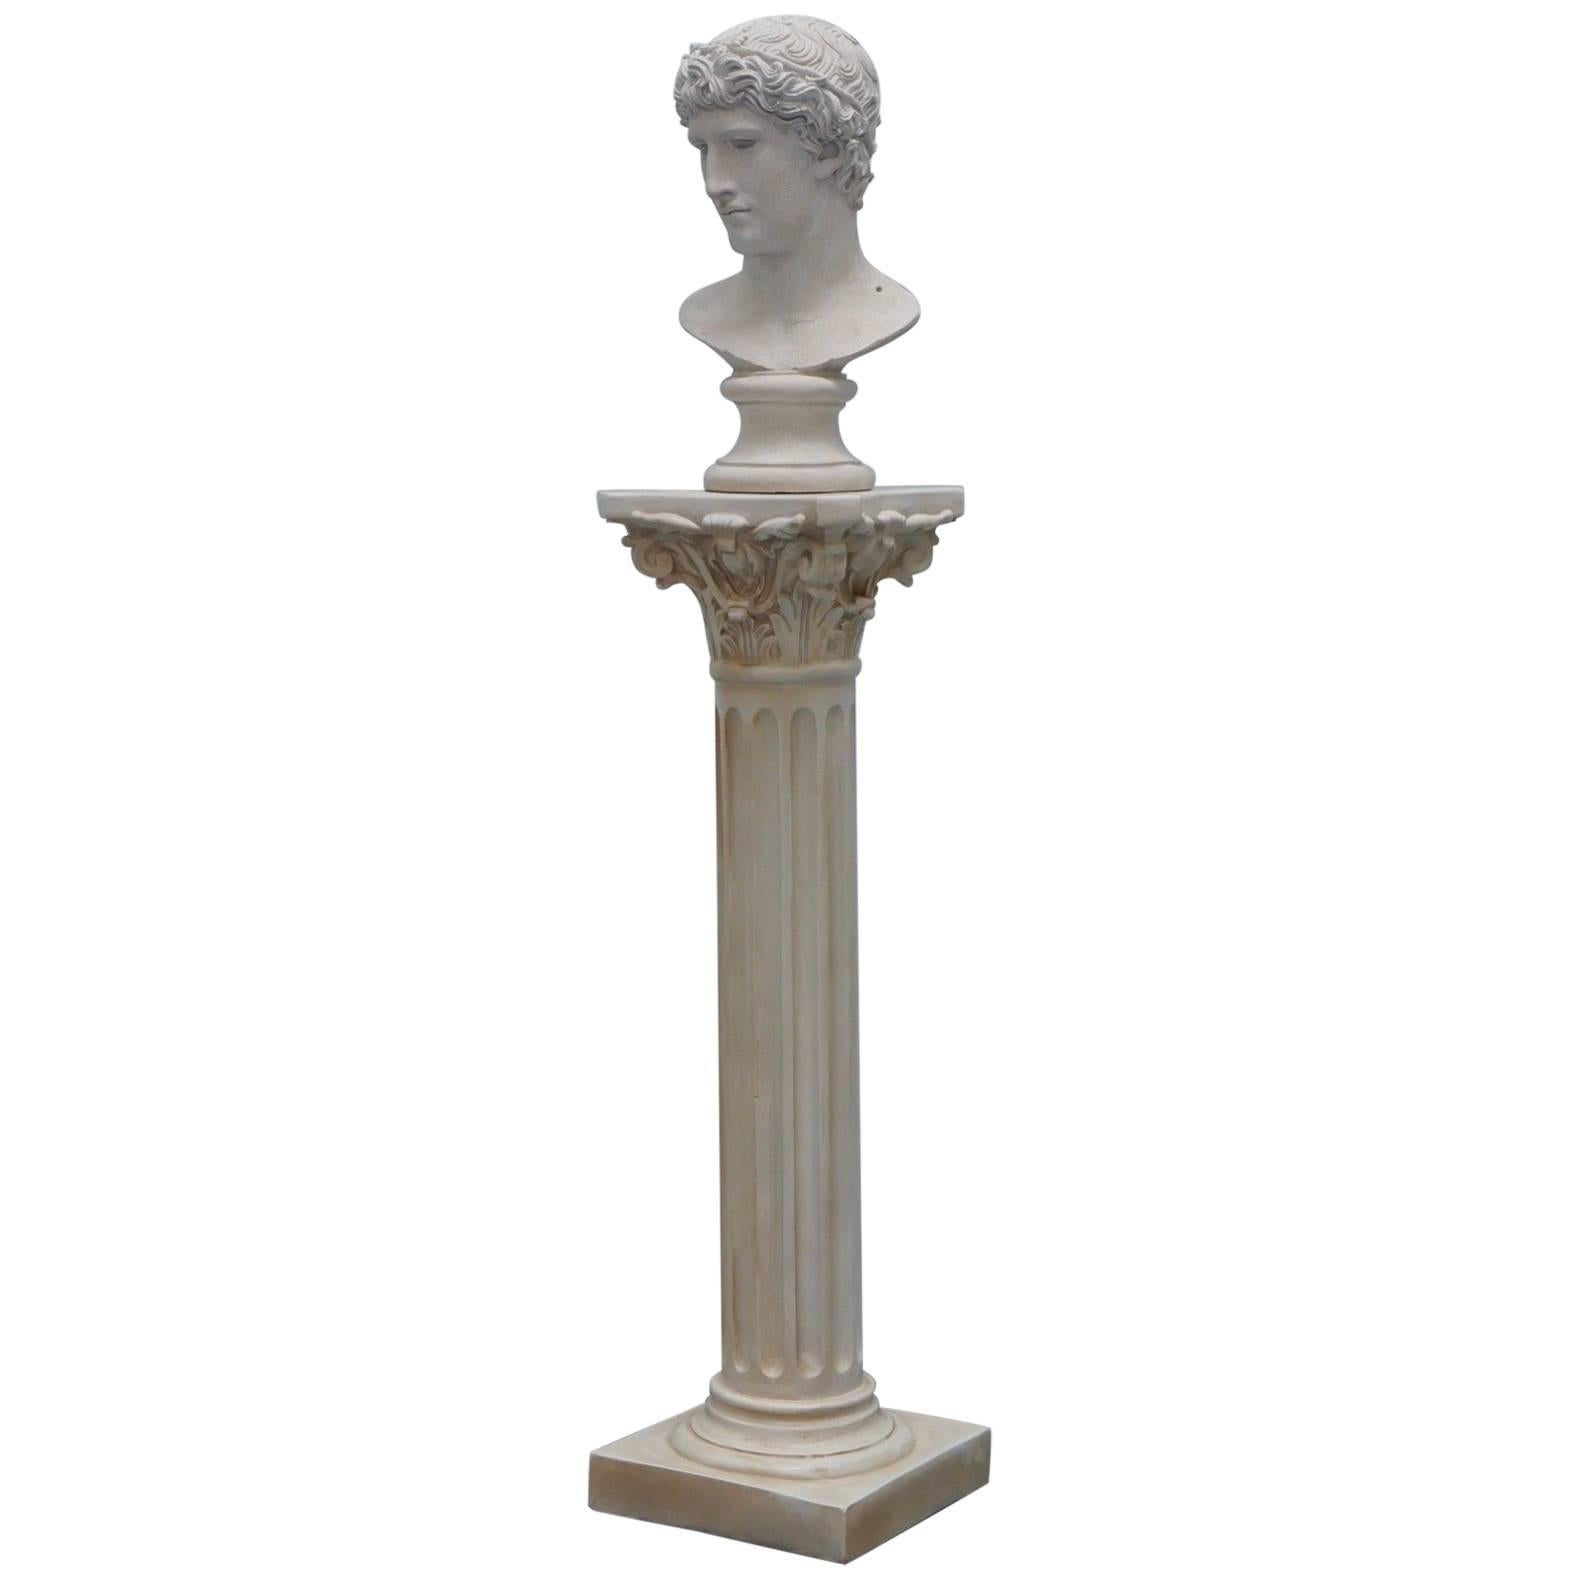 Austin Prod Inc 1984 Sculpture of Michelangelo's David Head & Corinthian Pillar